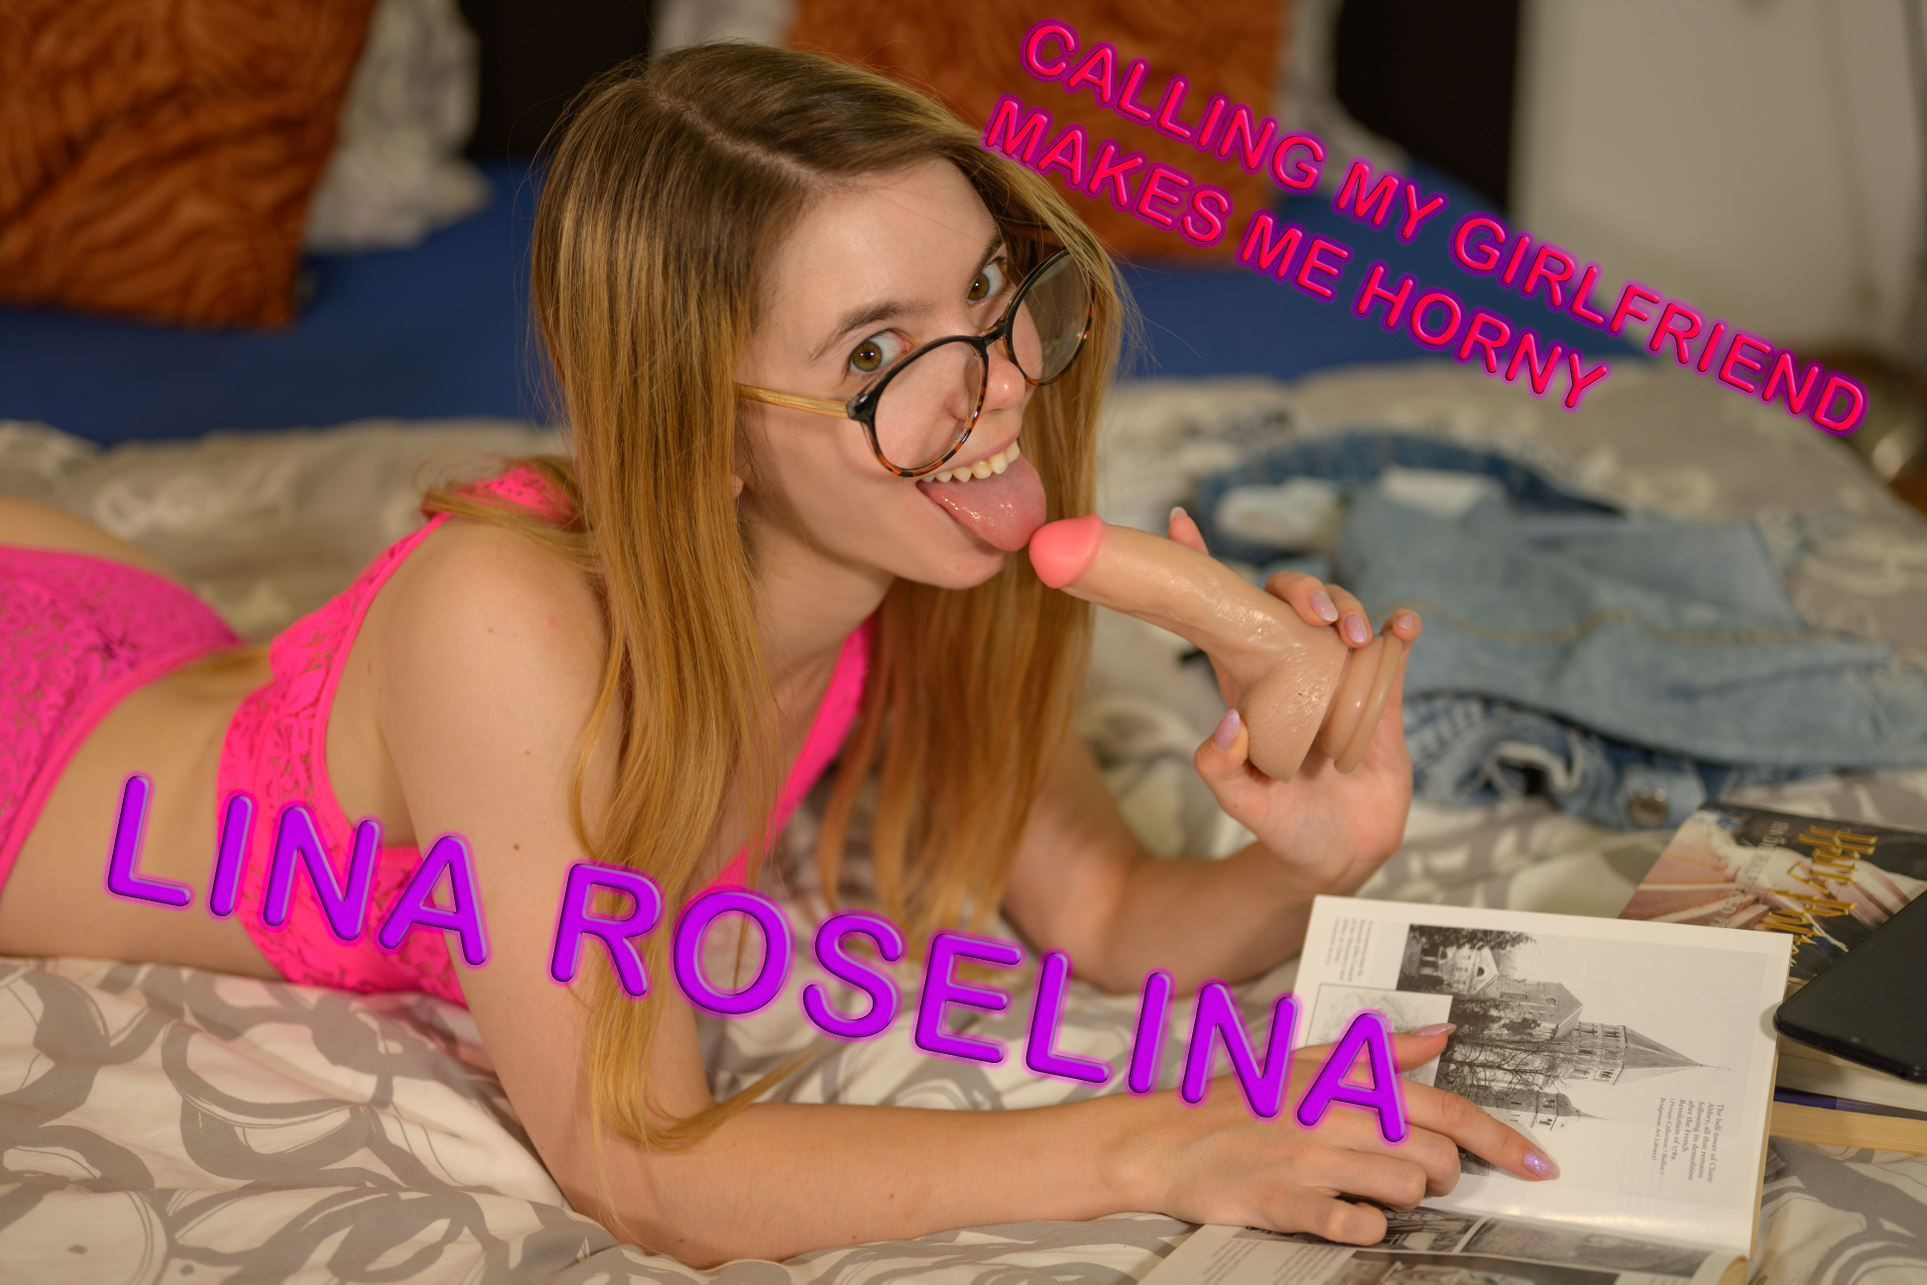 Calling My Girlfriend Made Me Horny: Lina Roselina Slideshow